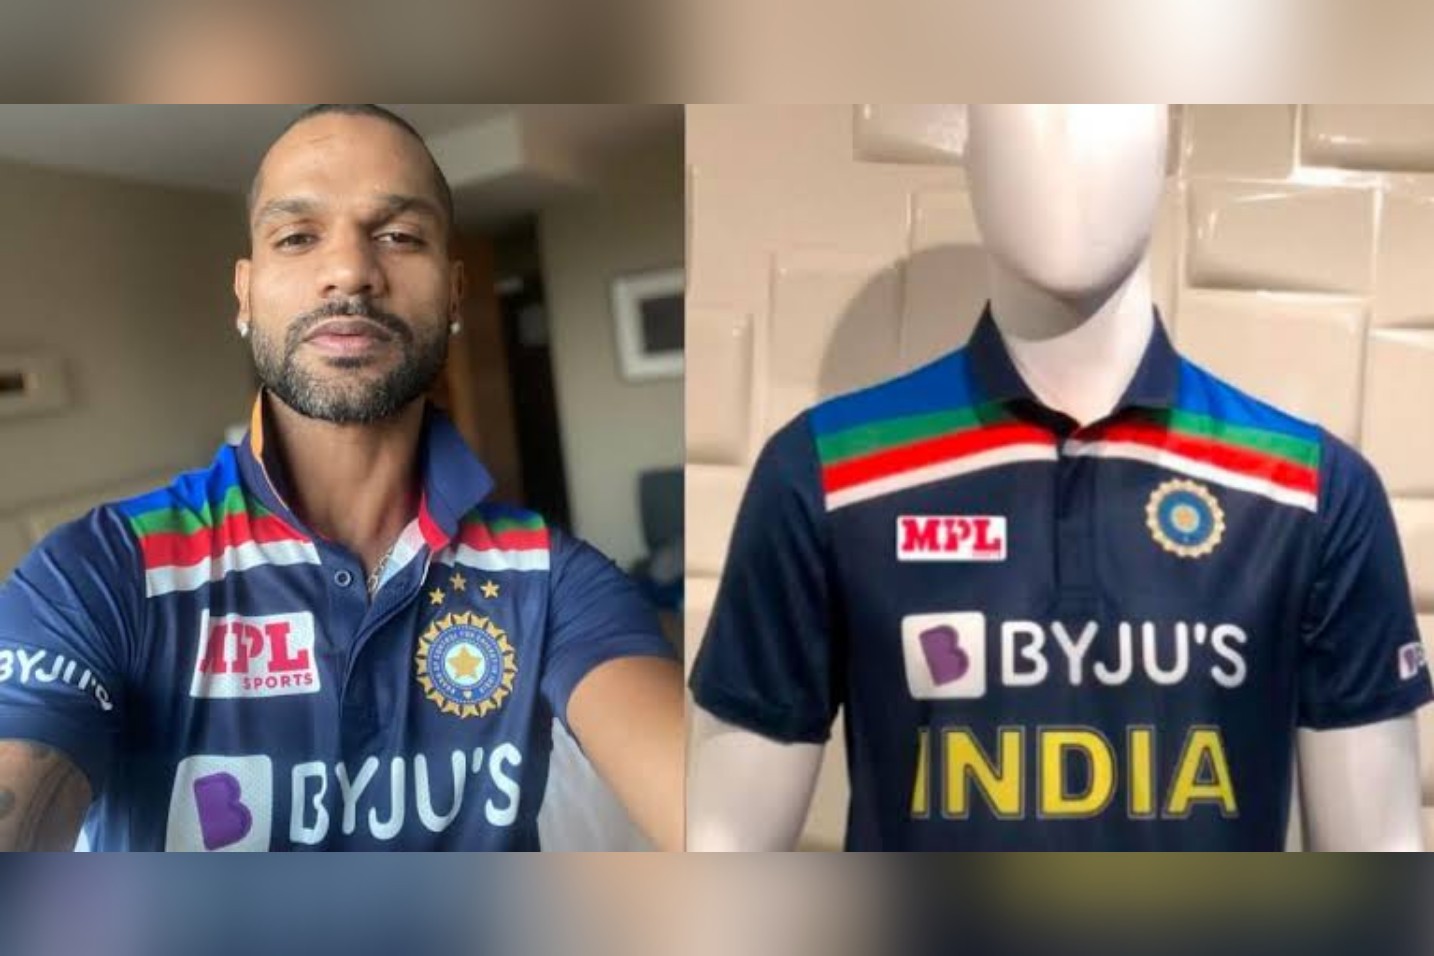 india byju's jersey